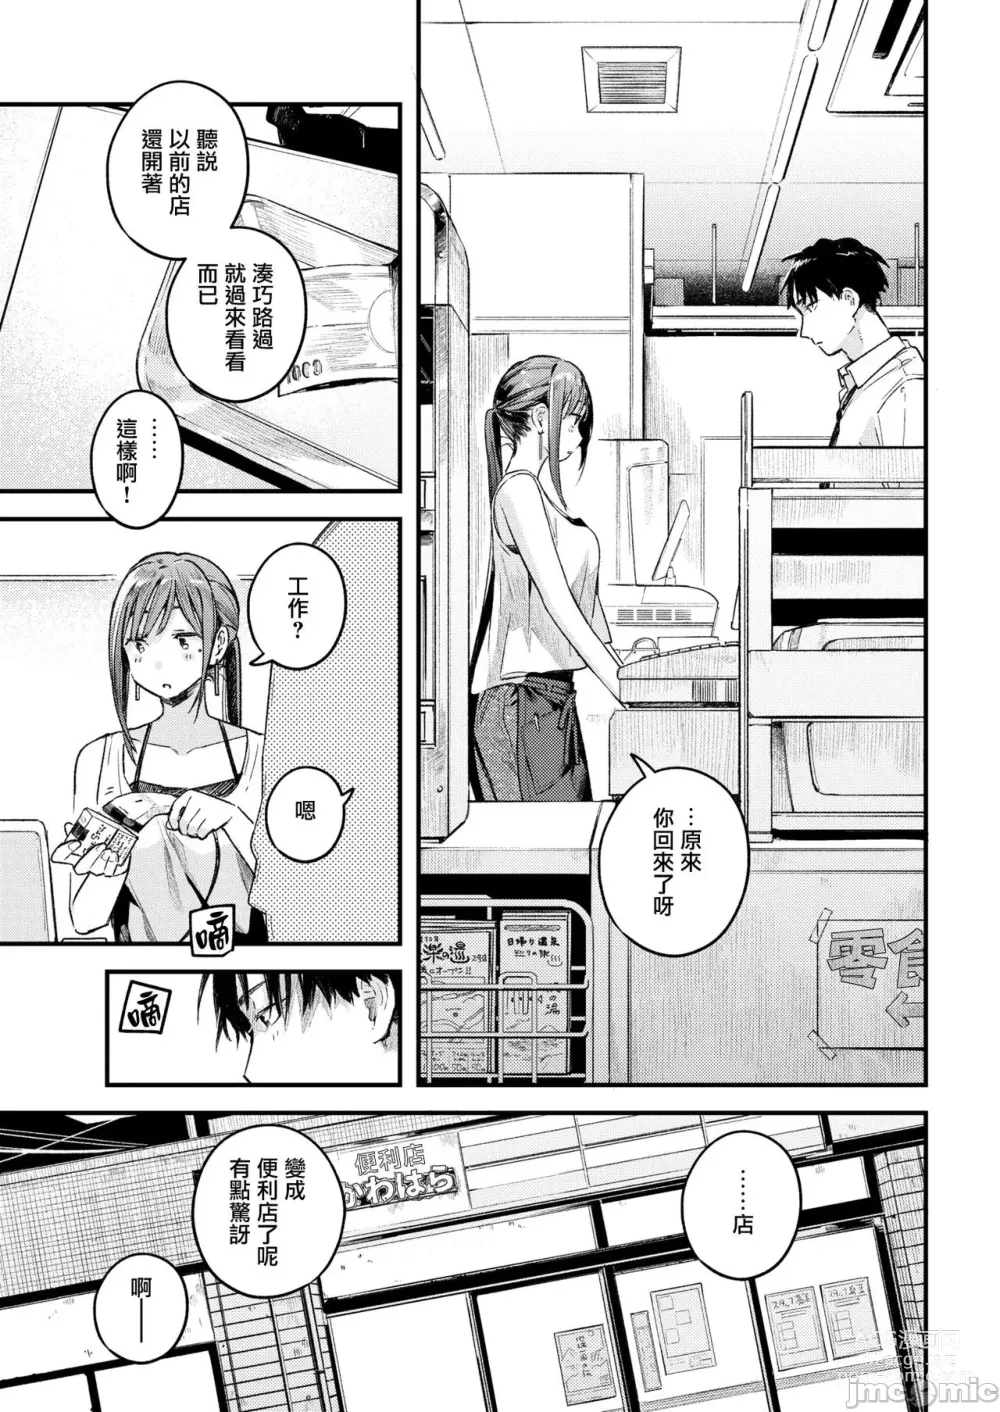 Page 3 of manga 像過去一樣